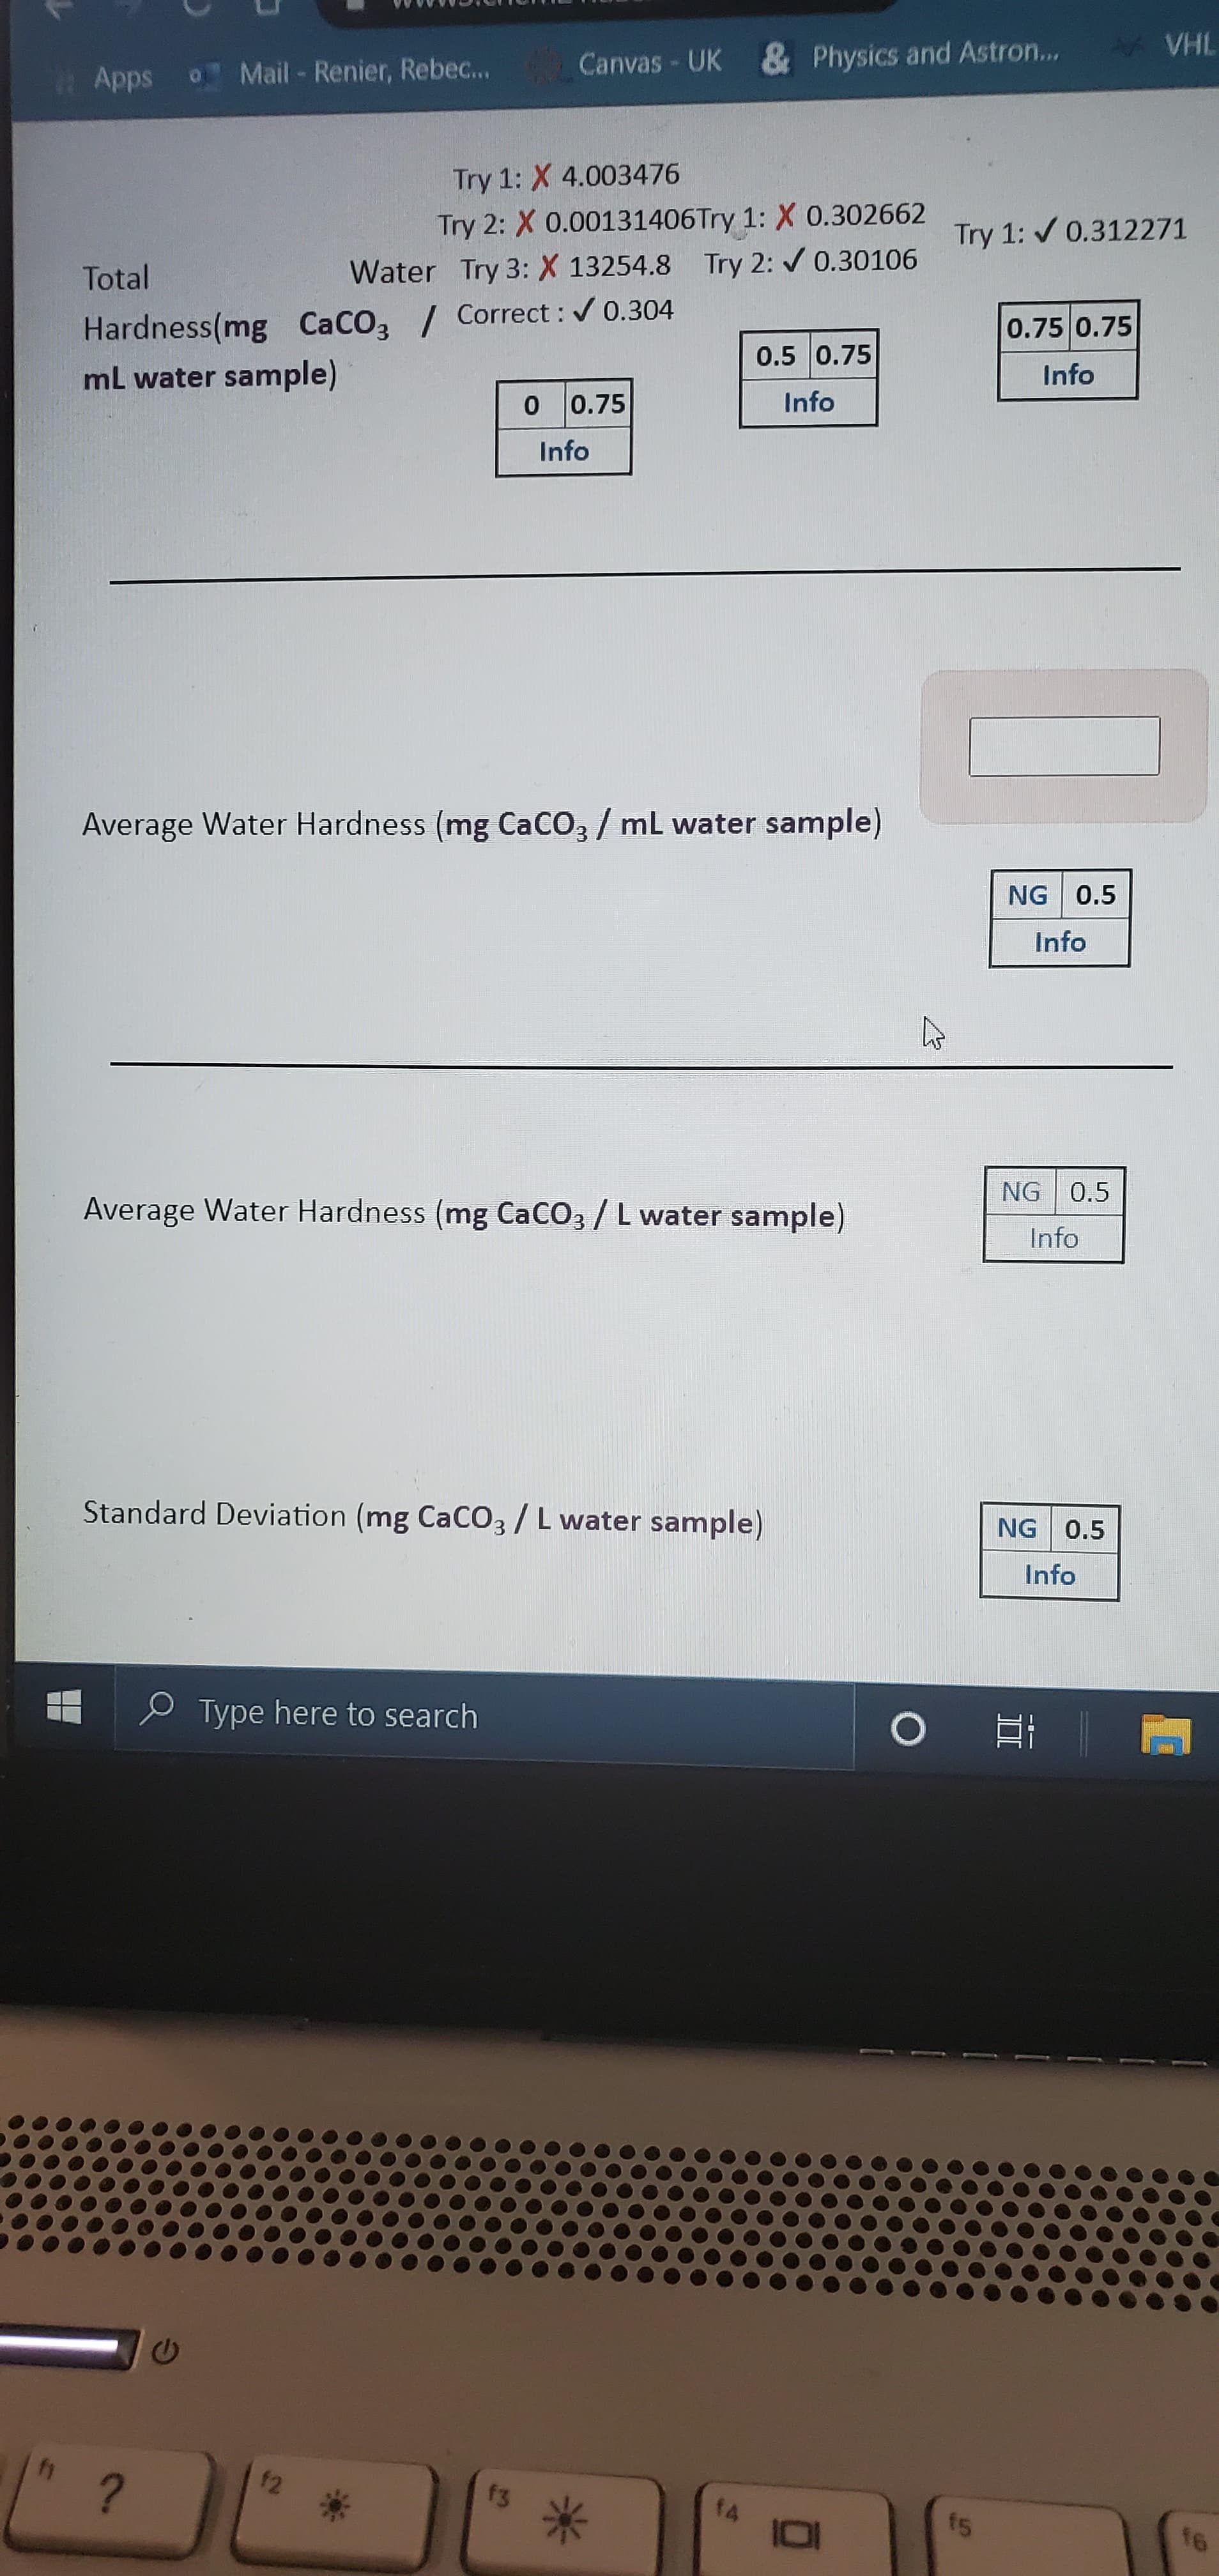 Average Water Hardness (mg CaCO, / ml water sample)
Average Water Hardness (mg CaCO3 / L water sample)
